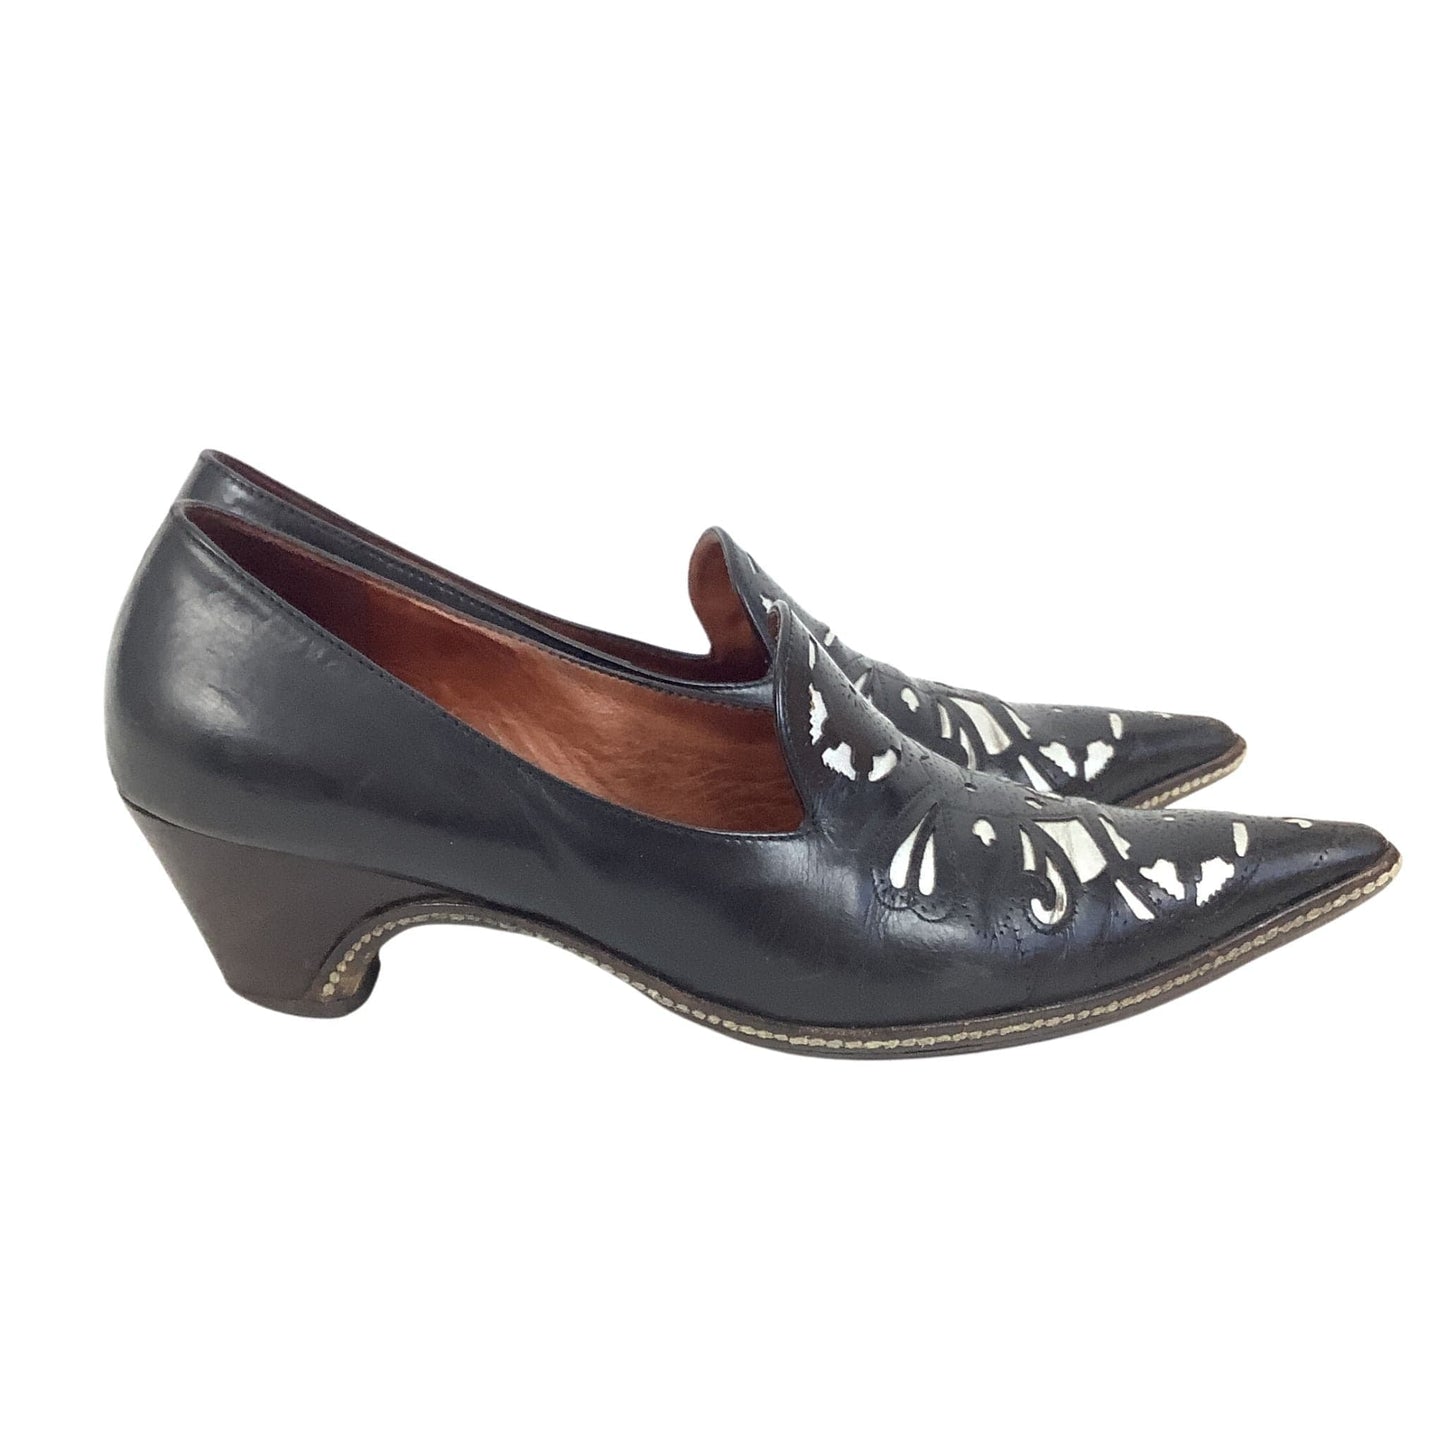 VTG Dries Van Noten Shoes 7.5 / B&W / Vintage 1990s